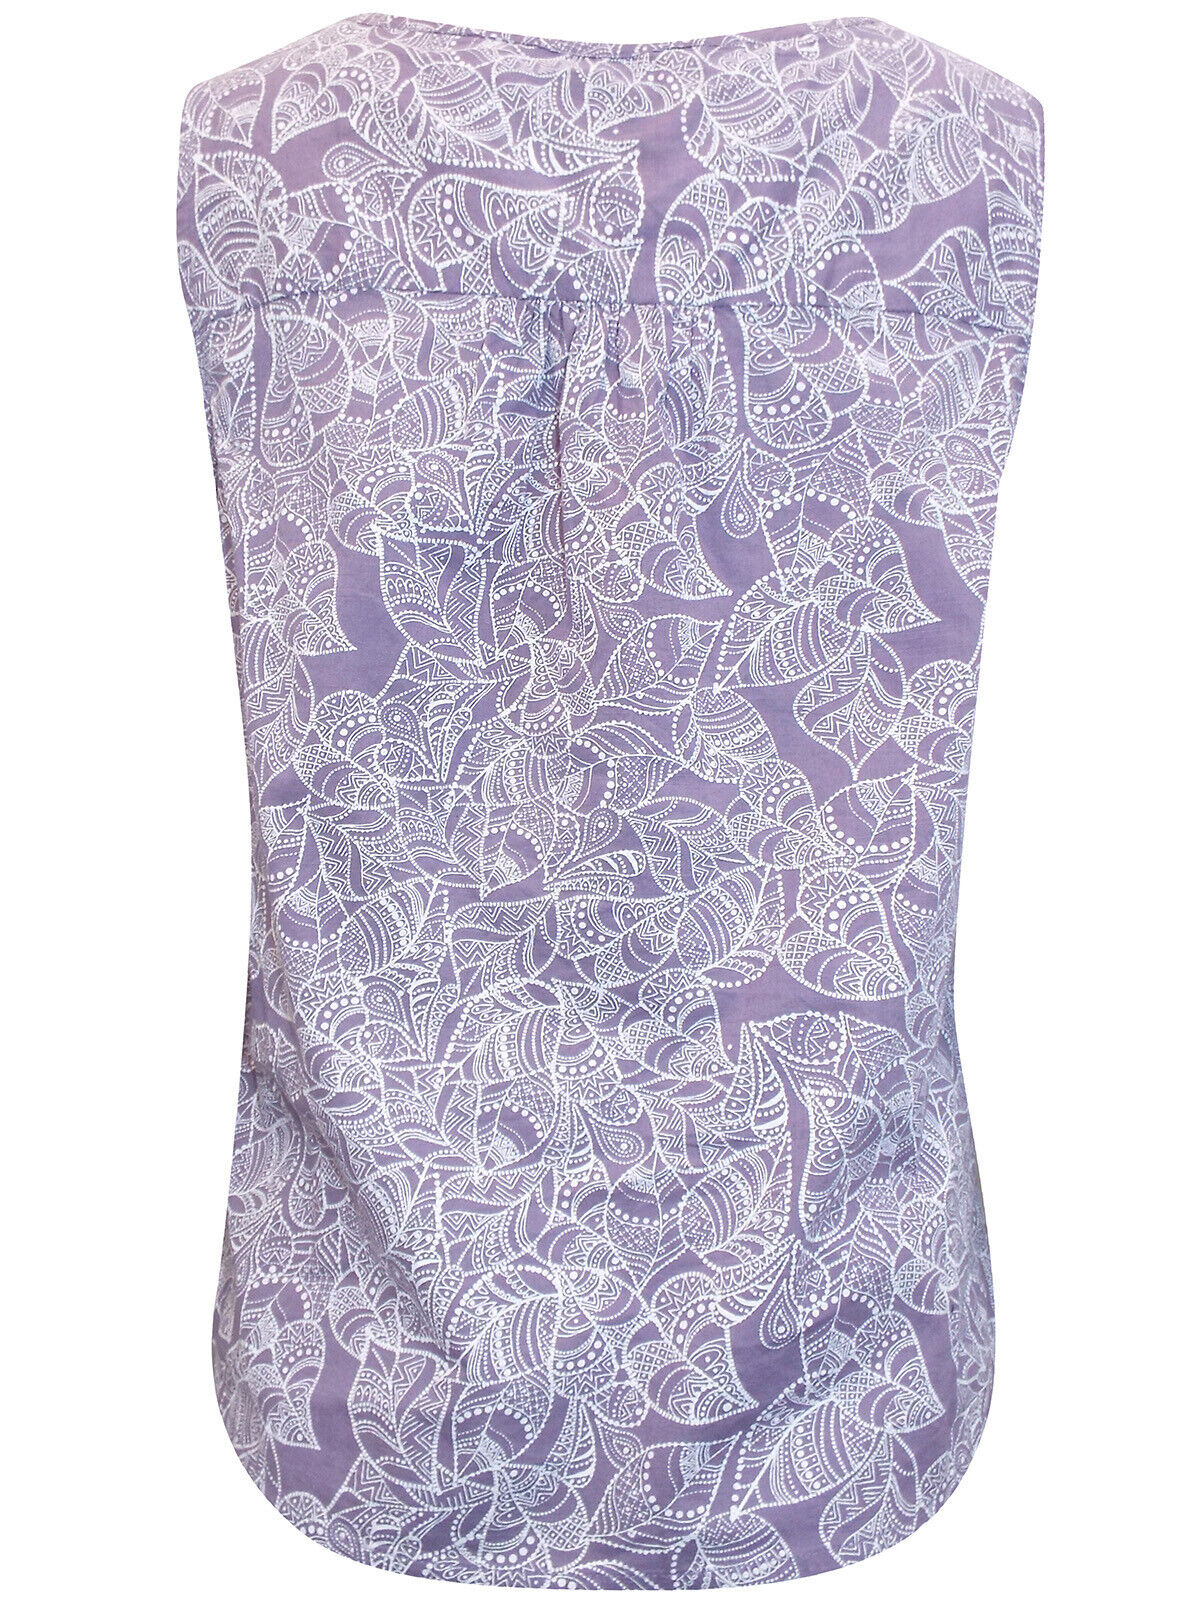 EX Mantaray Debenhams Purple Sleeveless Leaf Print Top 12, 14, 16, 18 RRP £25